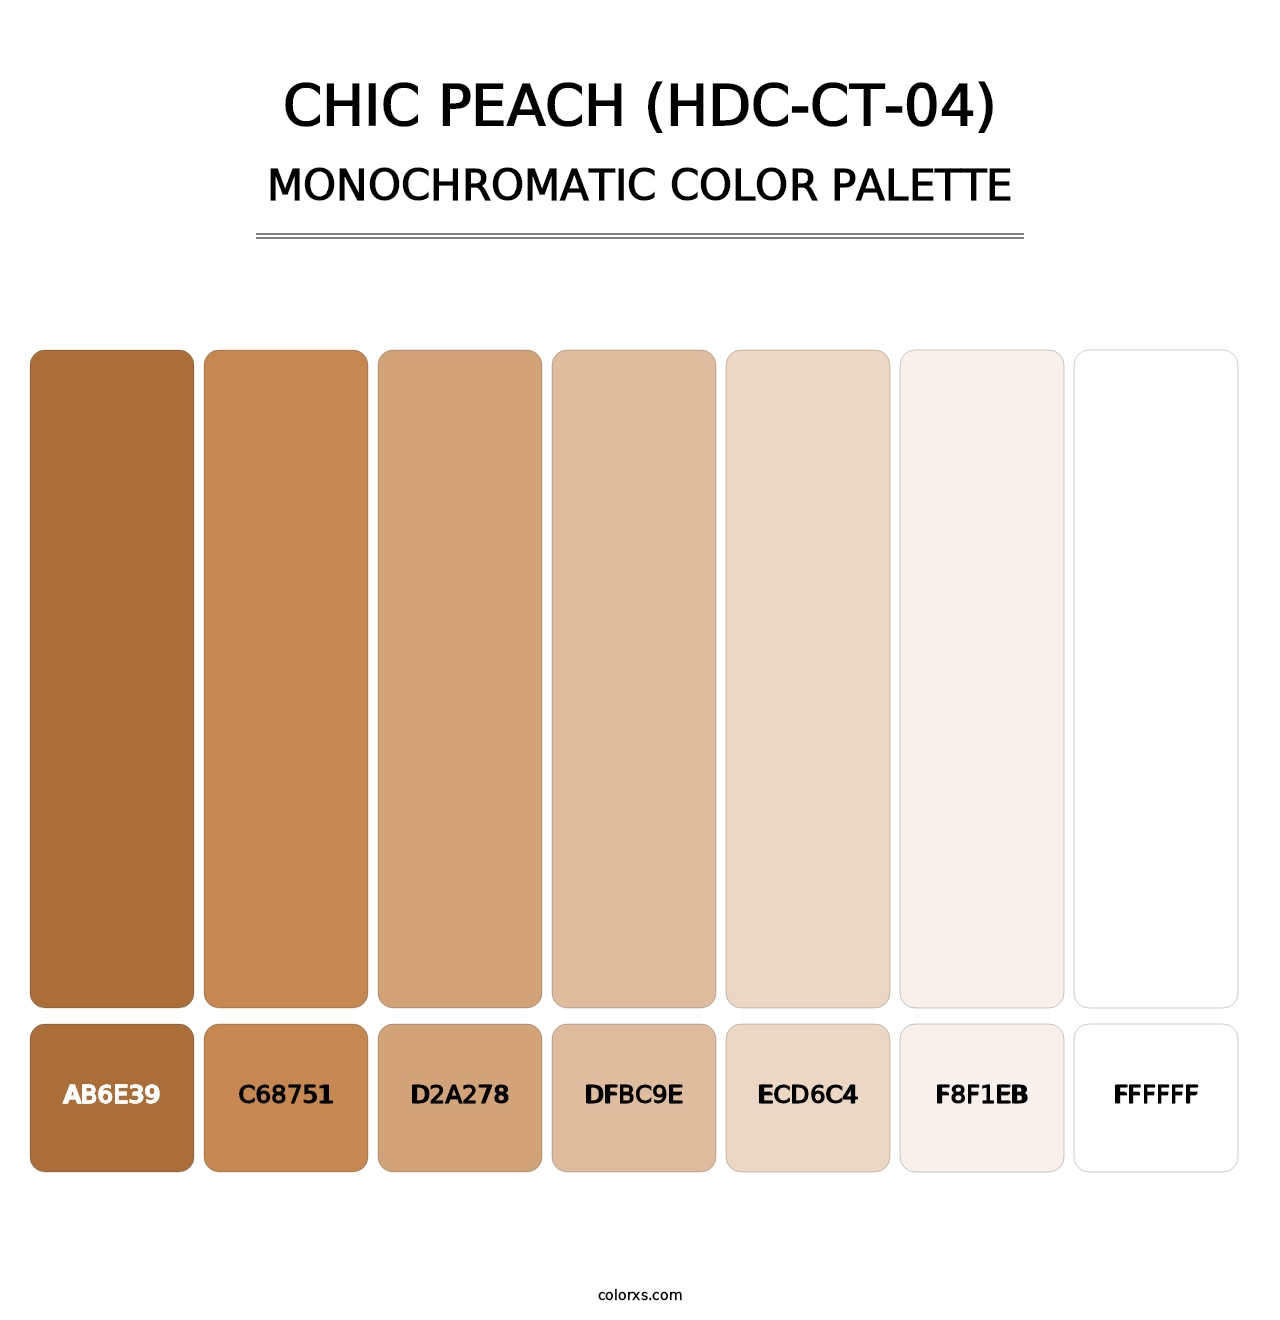 Chic Peach (HDC-CT-04) - Monochromatic Color Palette